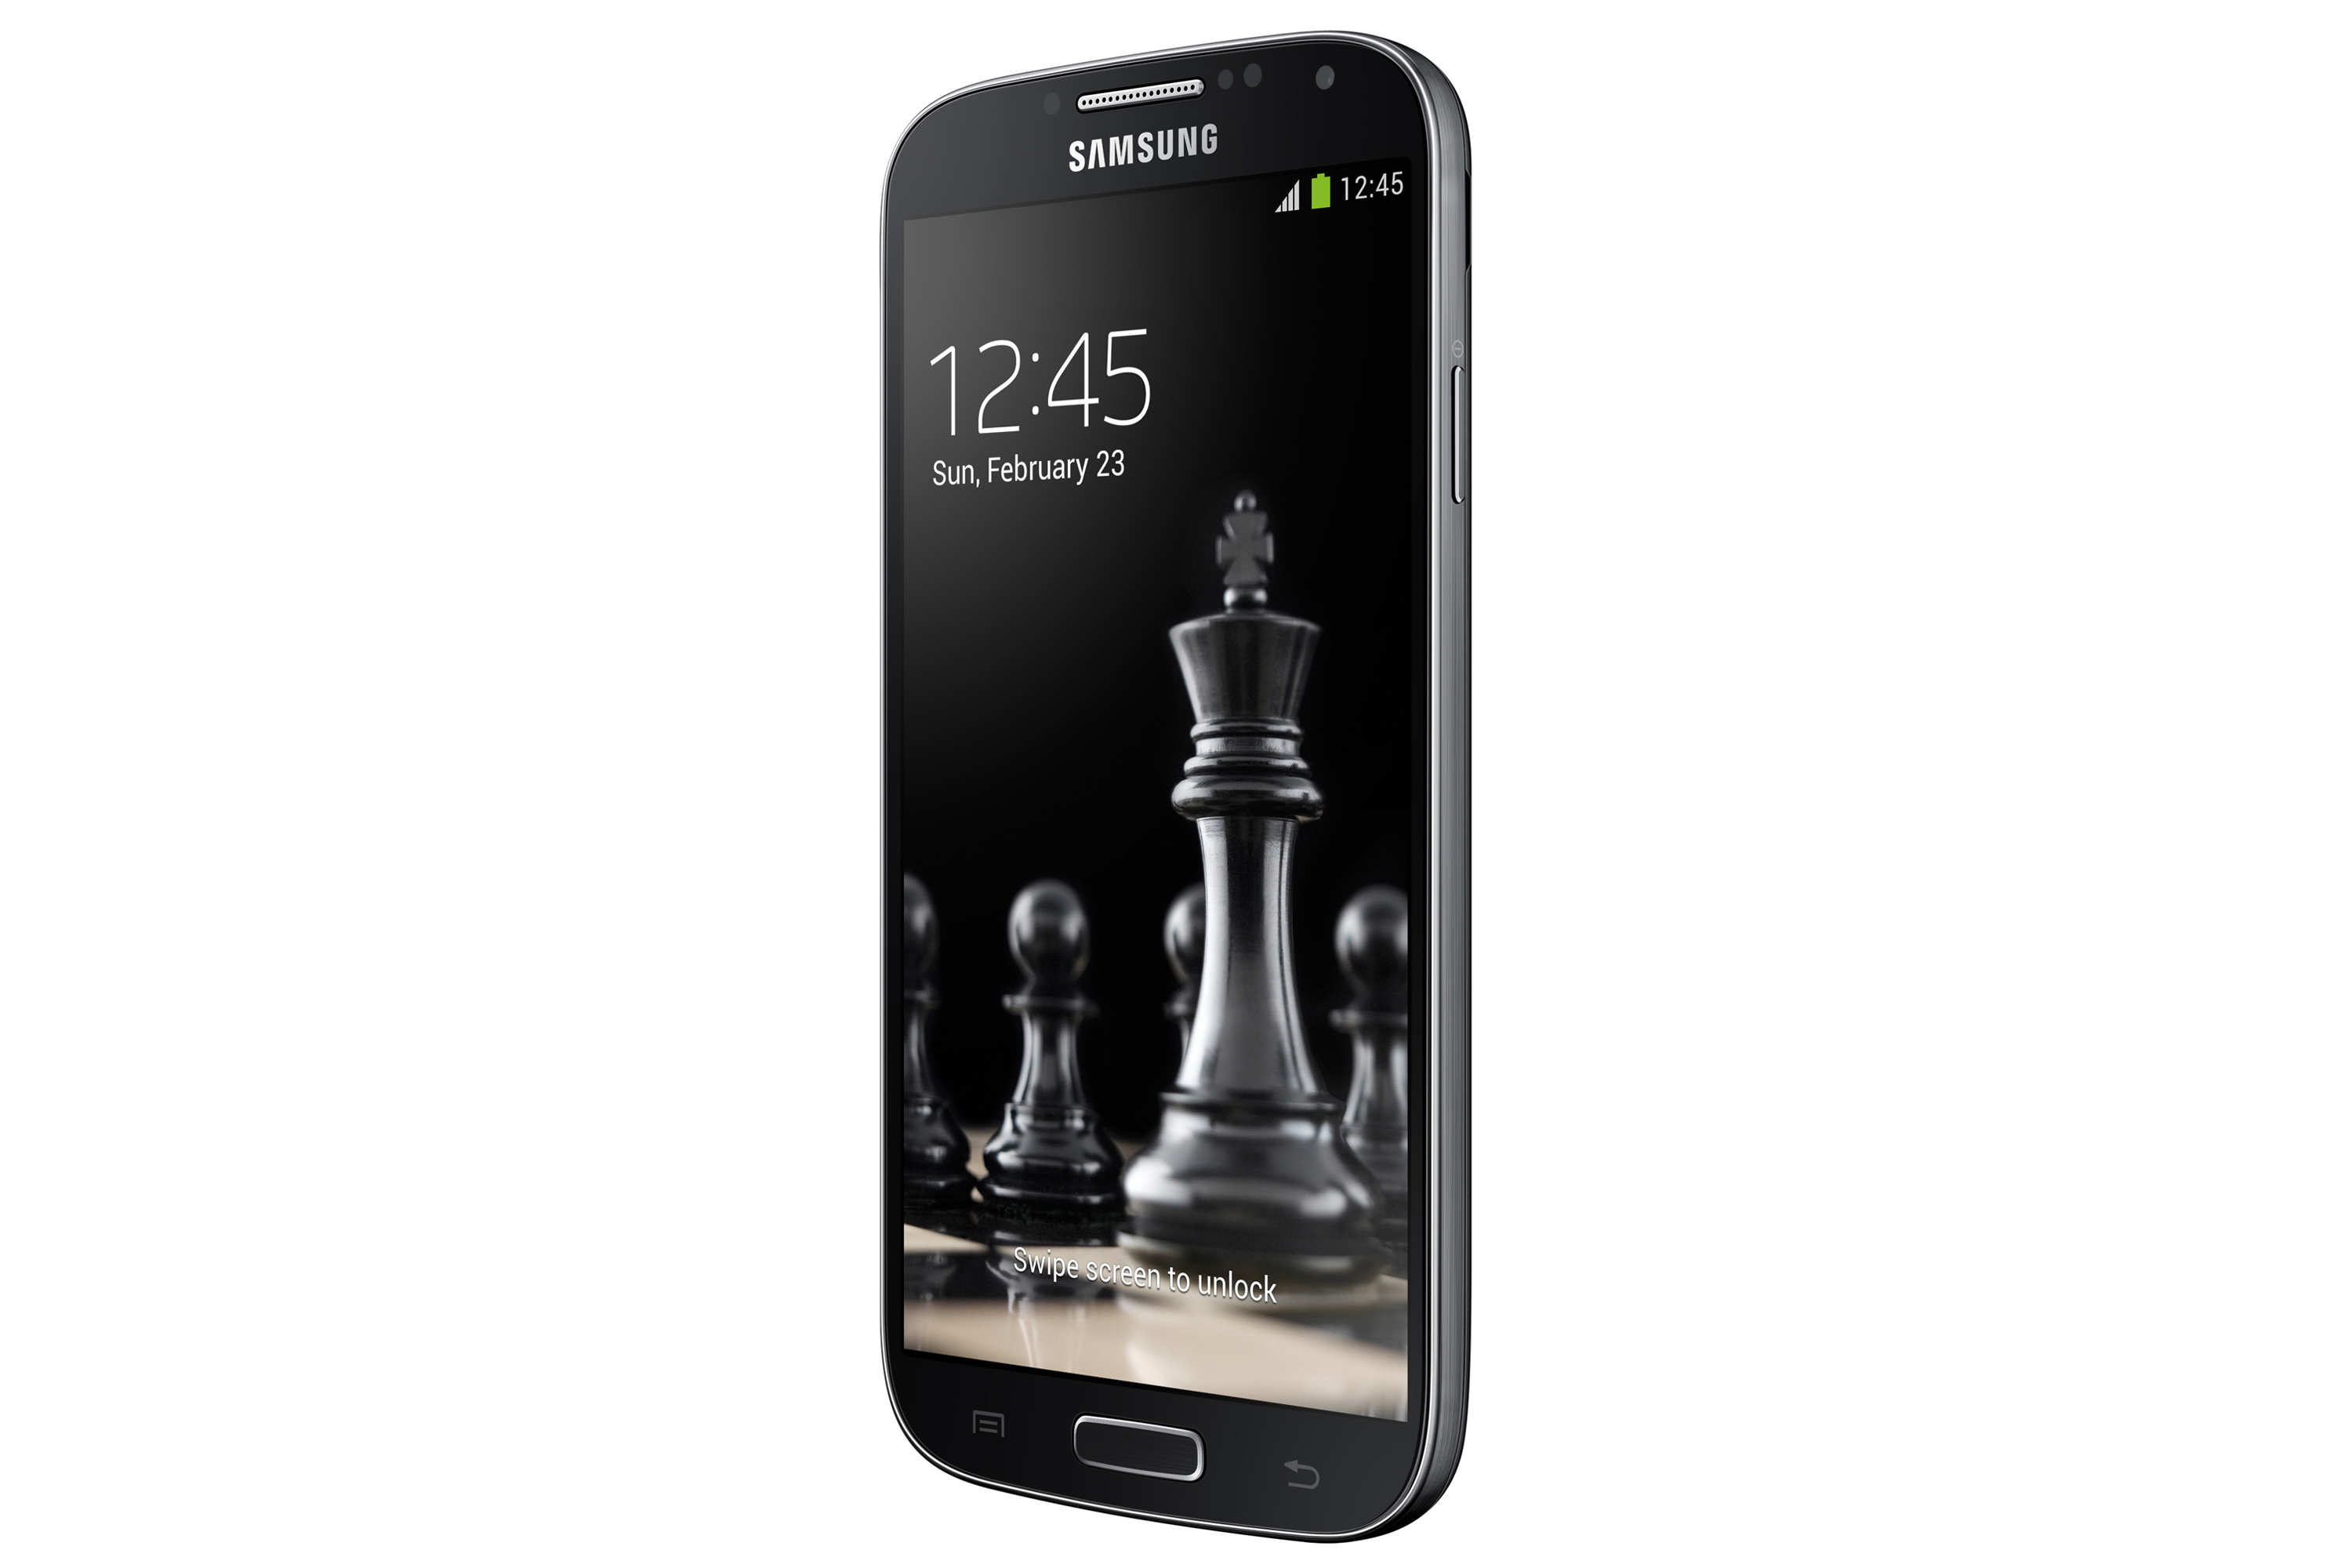 Gt s4 mini. Samsung Galaxy s4 Mini Black Edition. Samsung Galaxy s4 Black. Samsung Galaxy s4 Black Edition. Самсунг Блэк эдишн галакси s4.